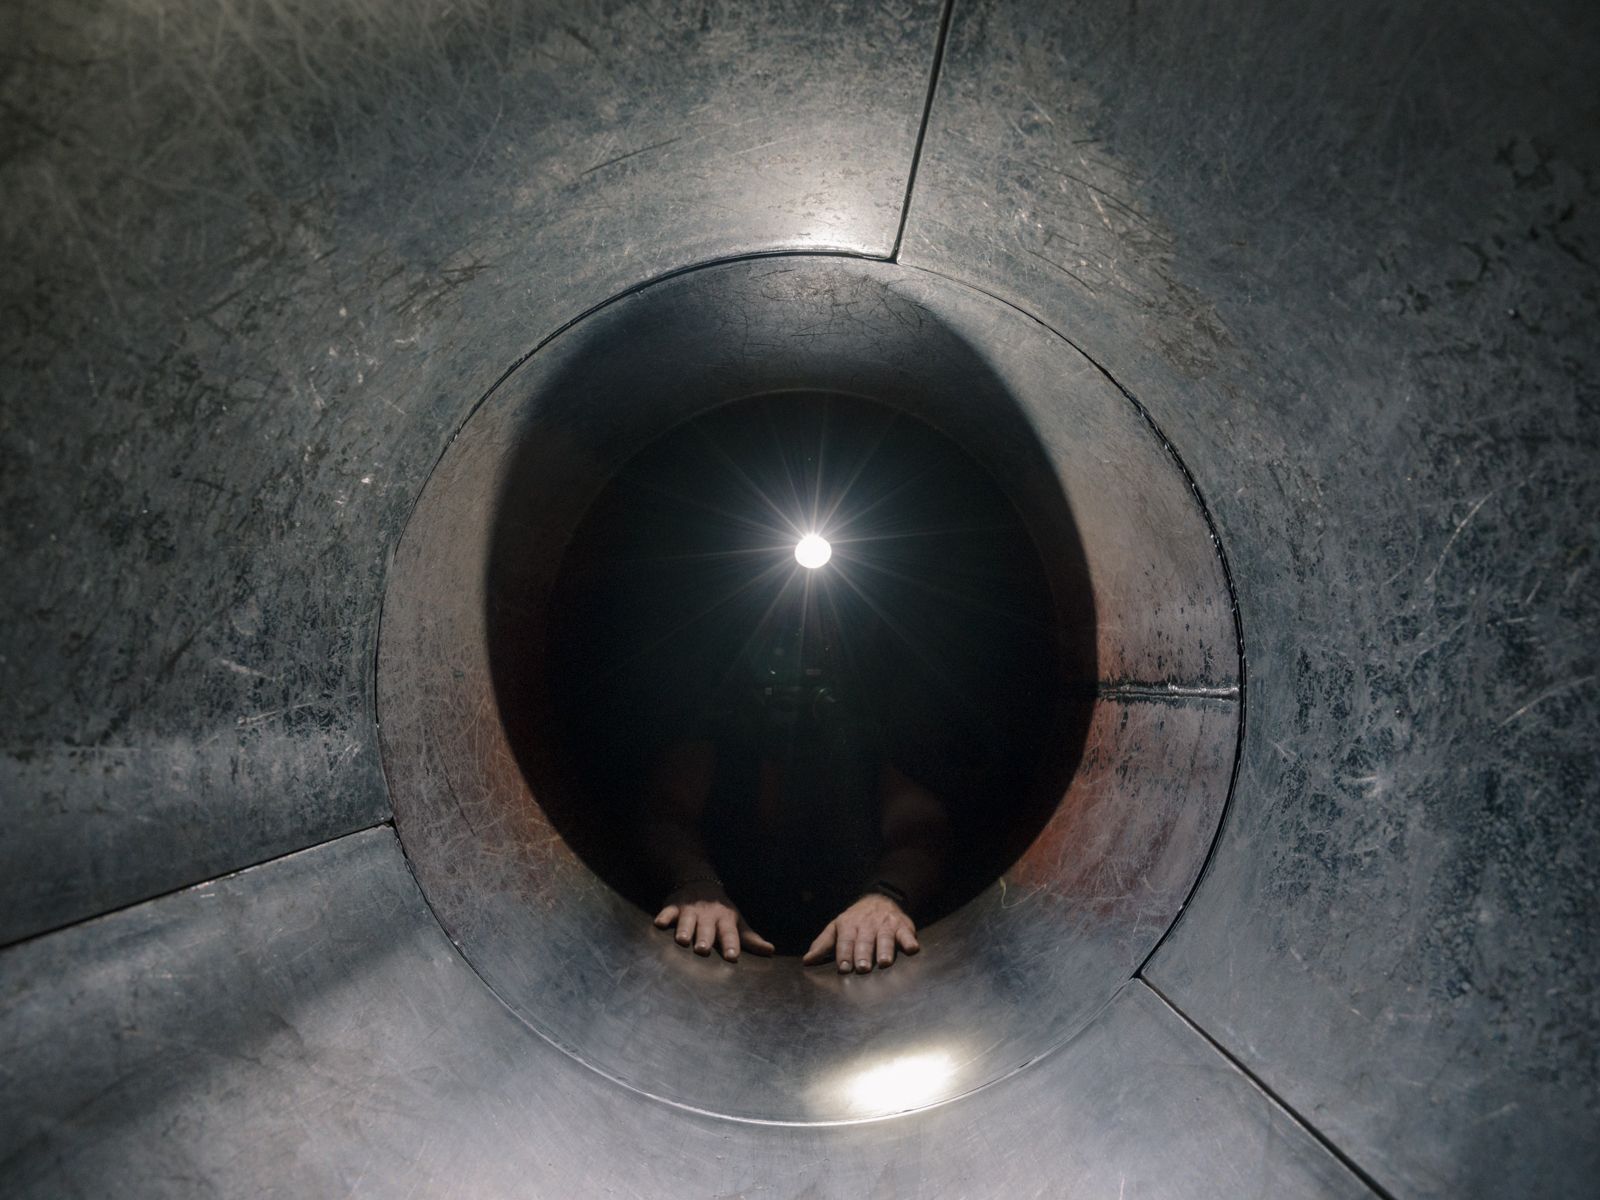 © Arne Piepke - During training, the men often have to crawl through narrow tubes.